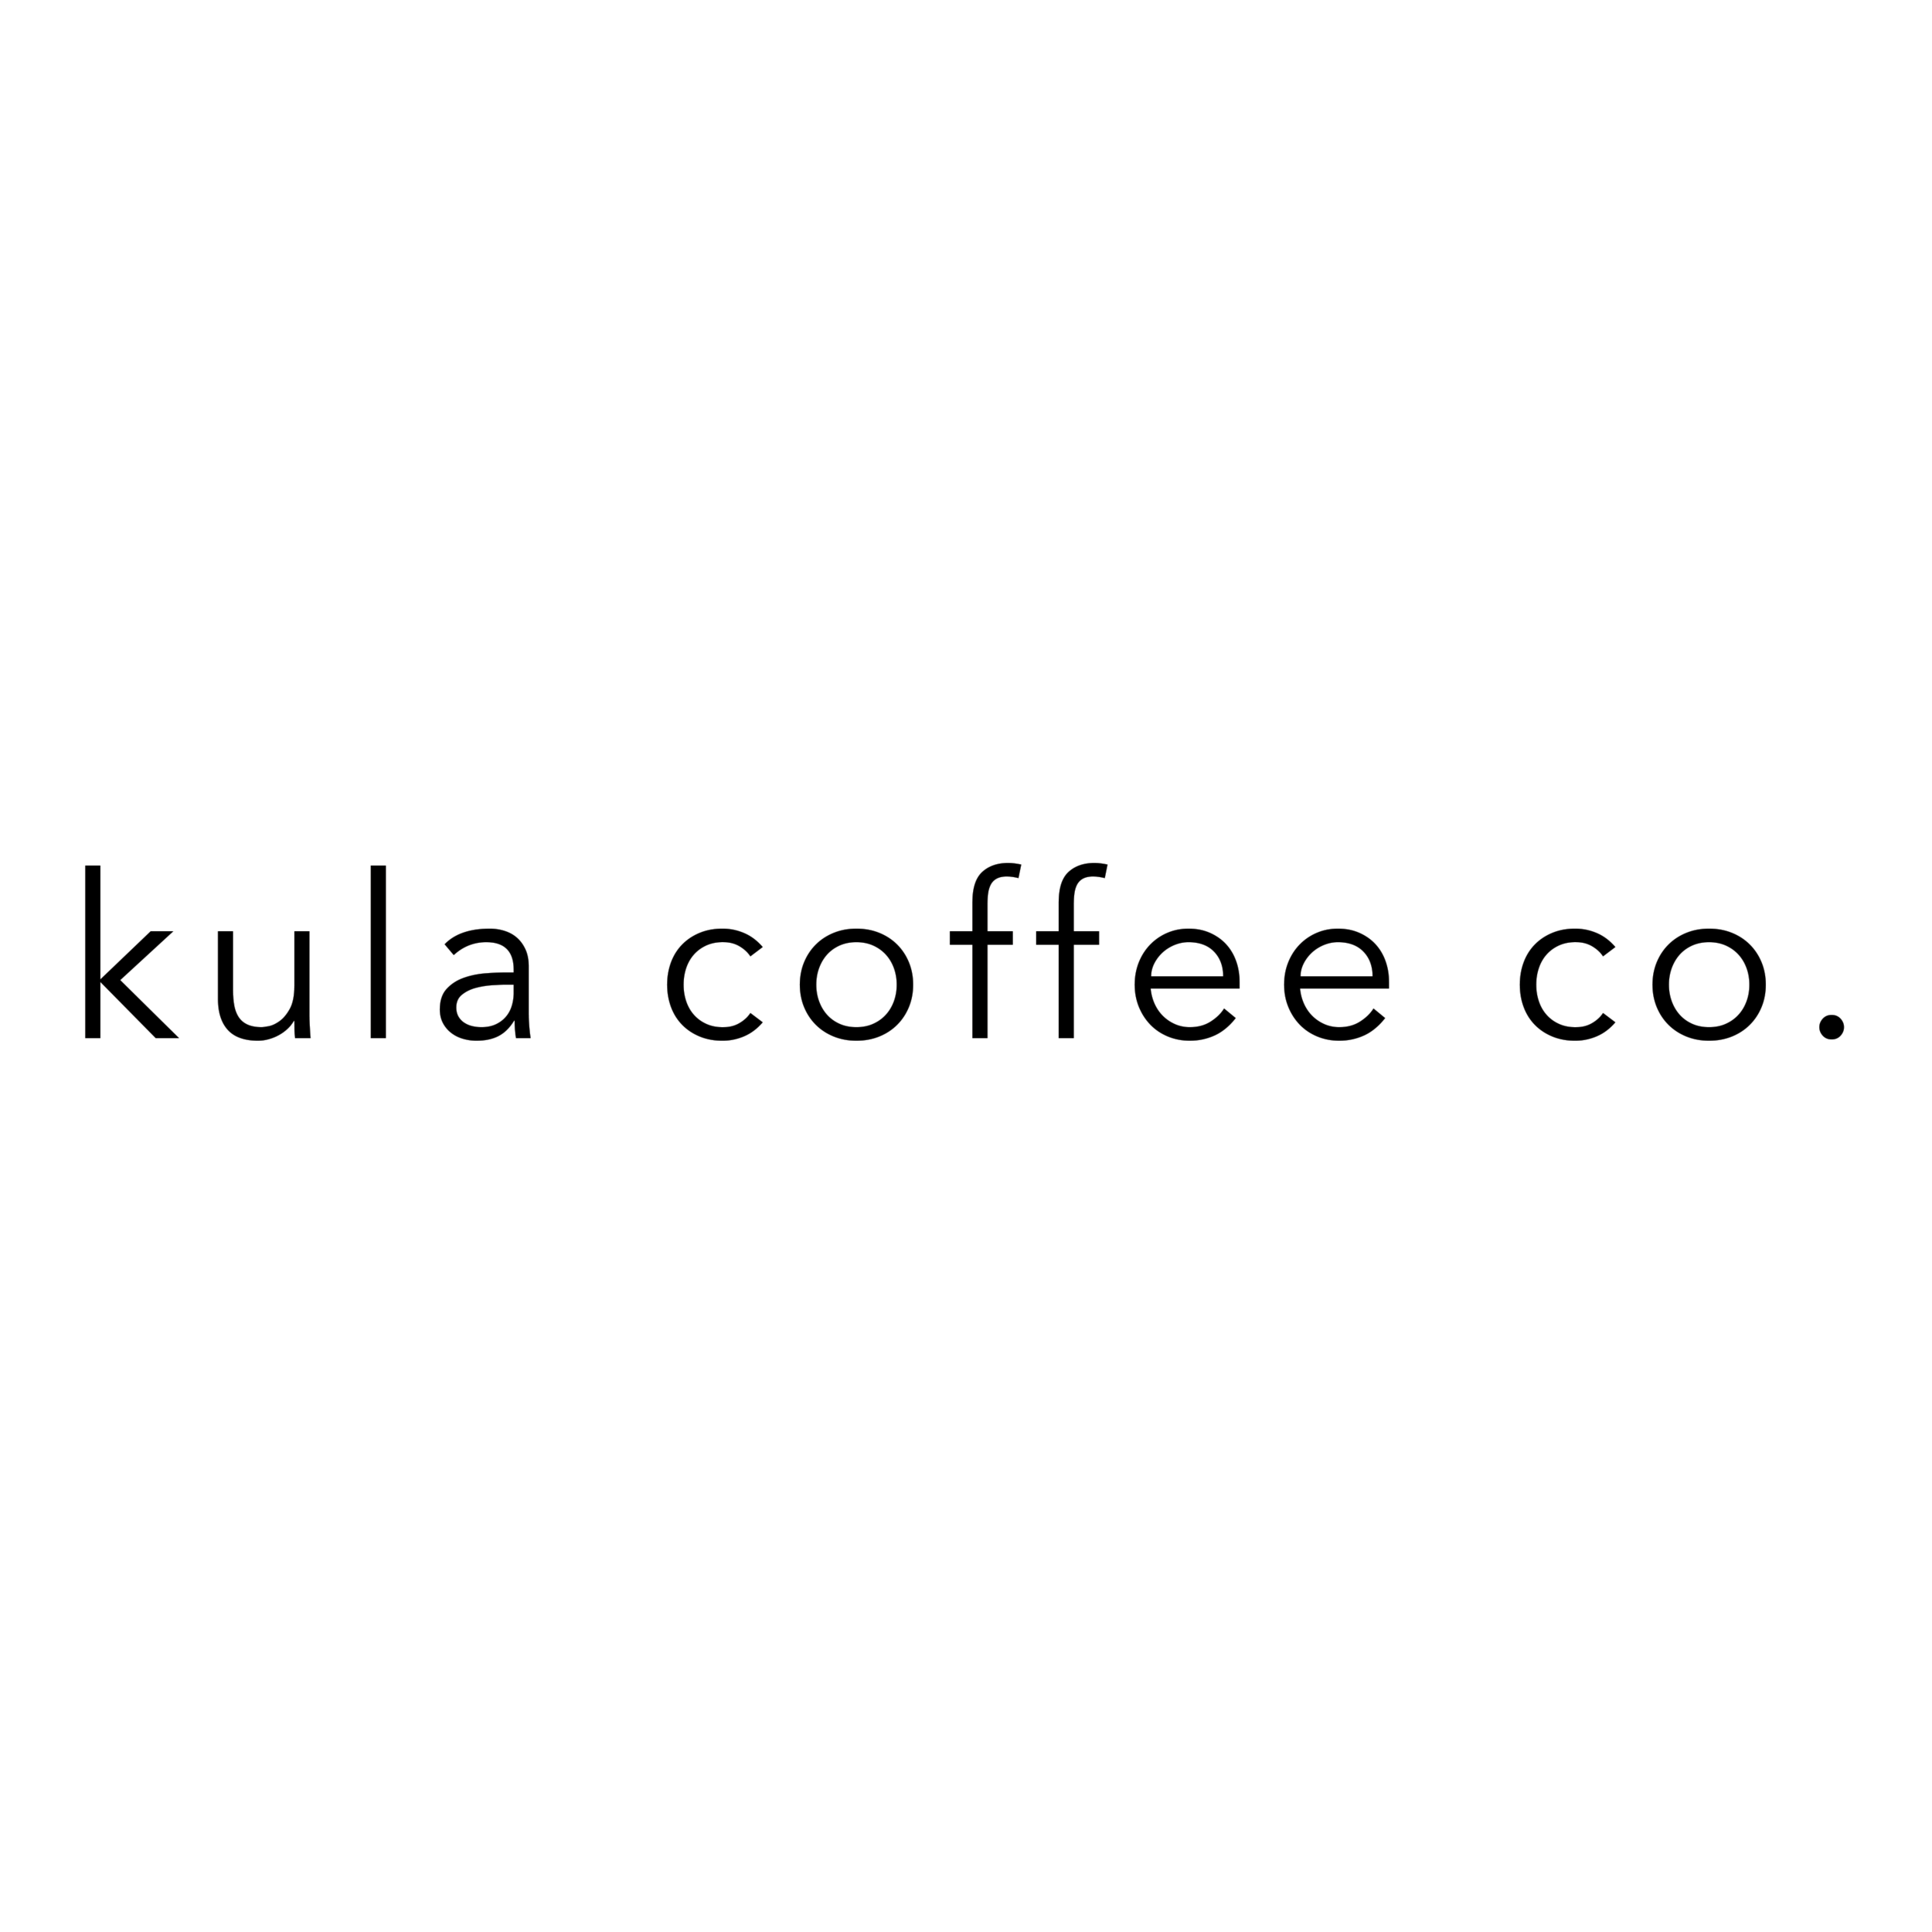 kula coffee co logo (horizontal).png